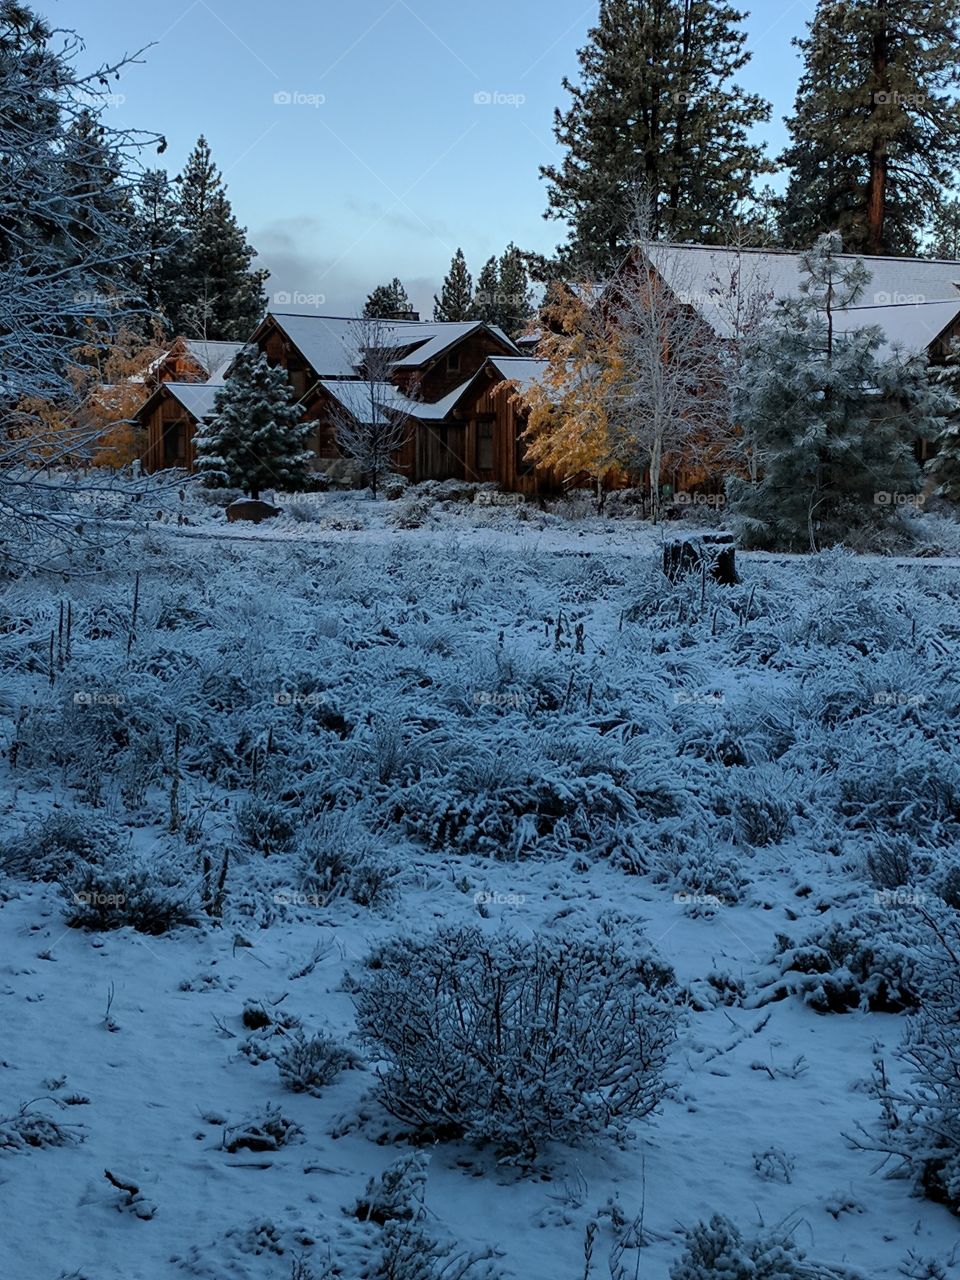 Snowy cabins